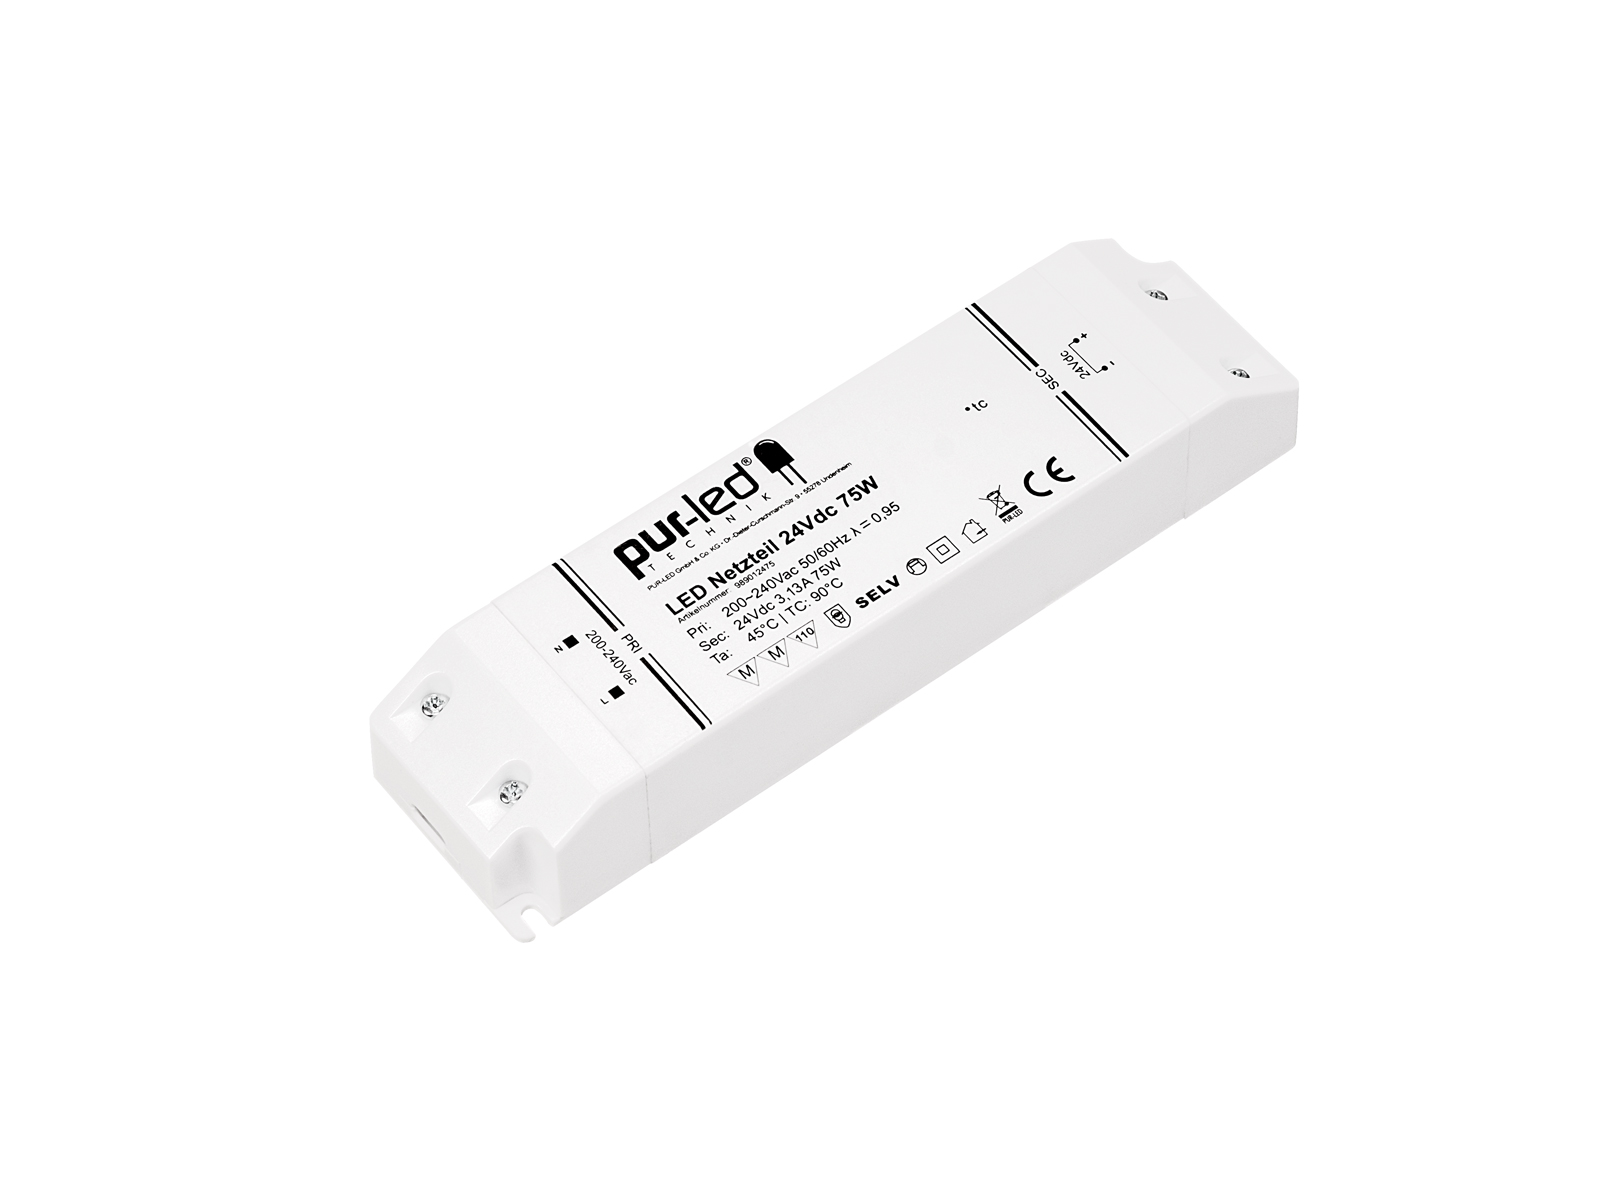 LED-Netzteile 24V für Ihre LED-Beleuchtung kaufen | PUR-LED